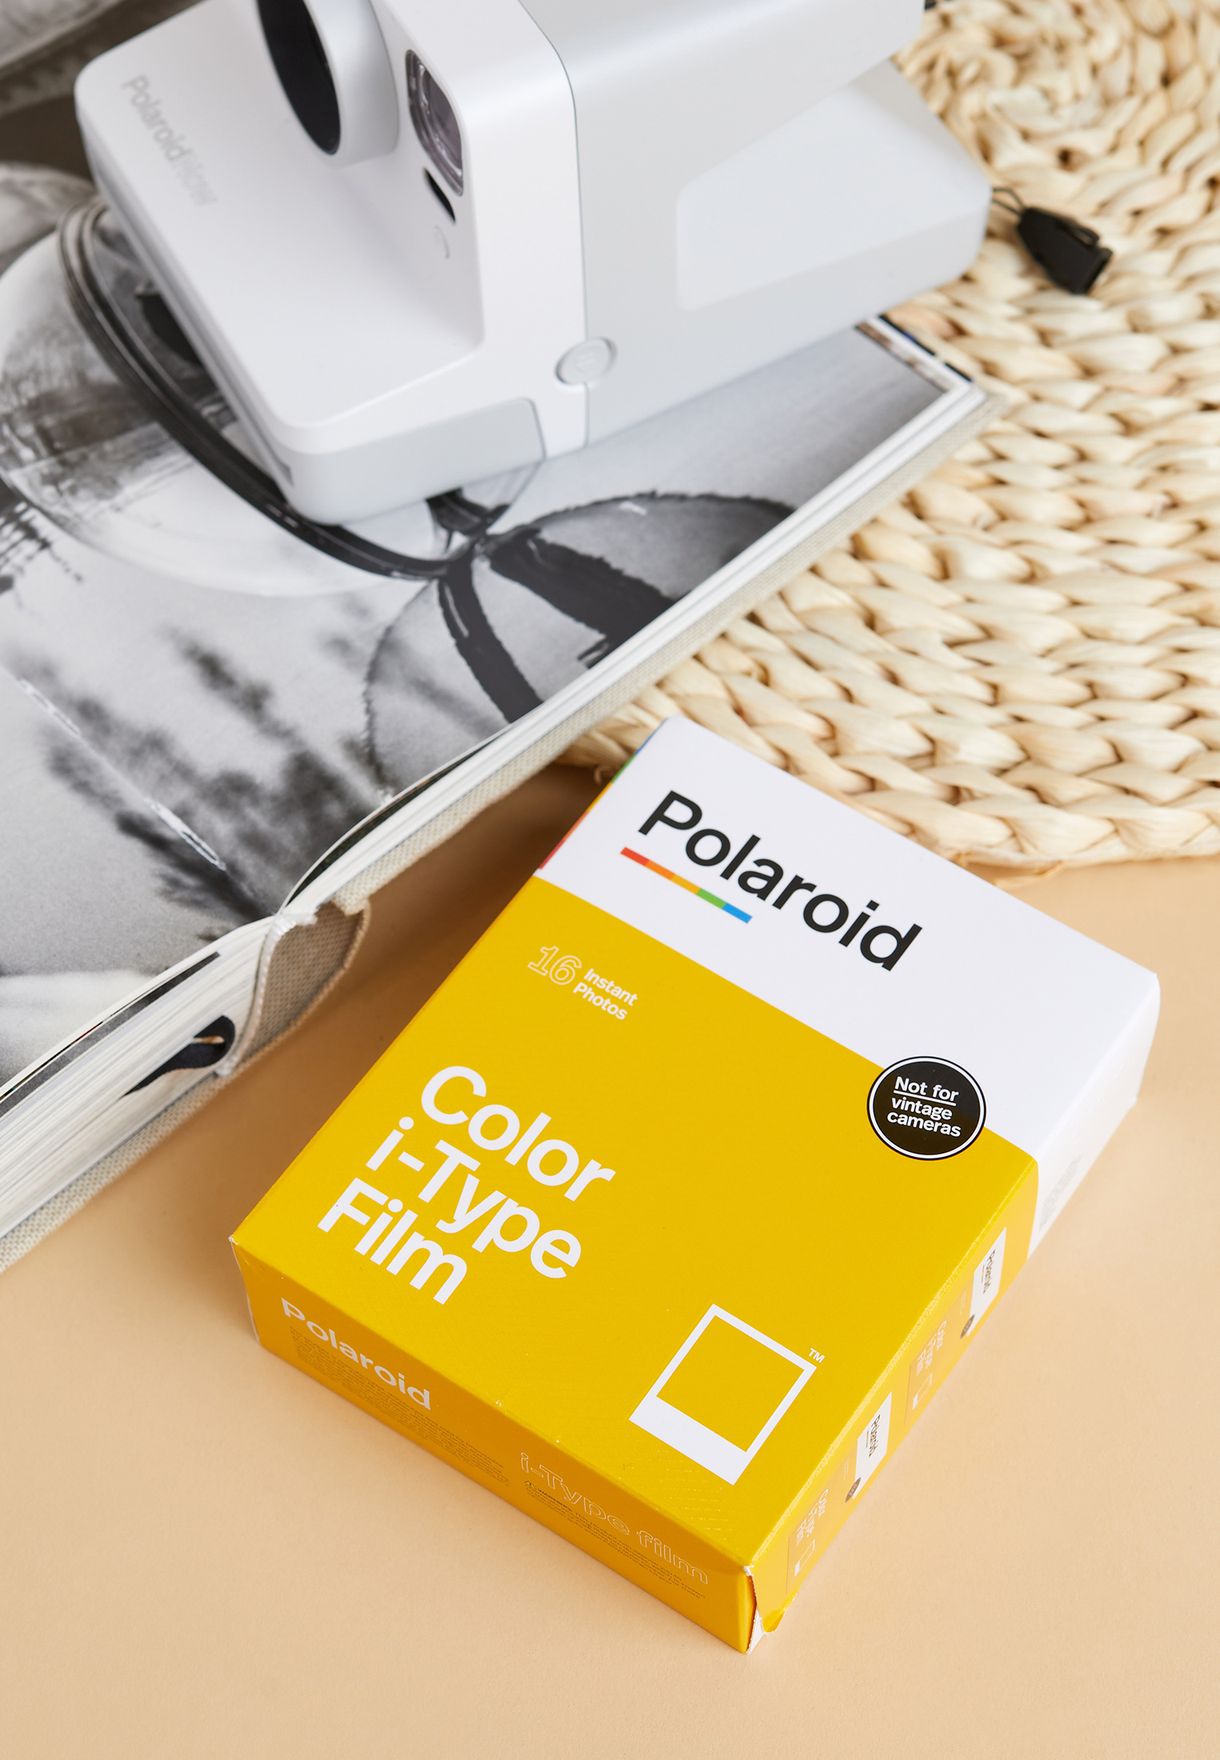 Polaroid Now I-Type Instant Camera Everything Box